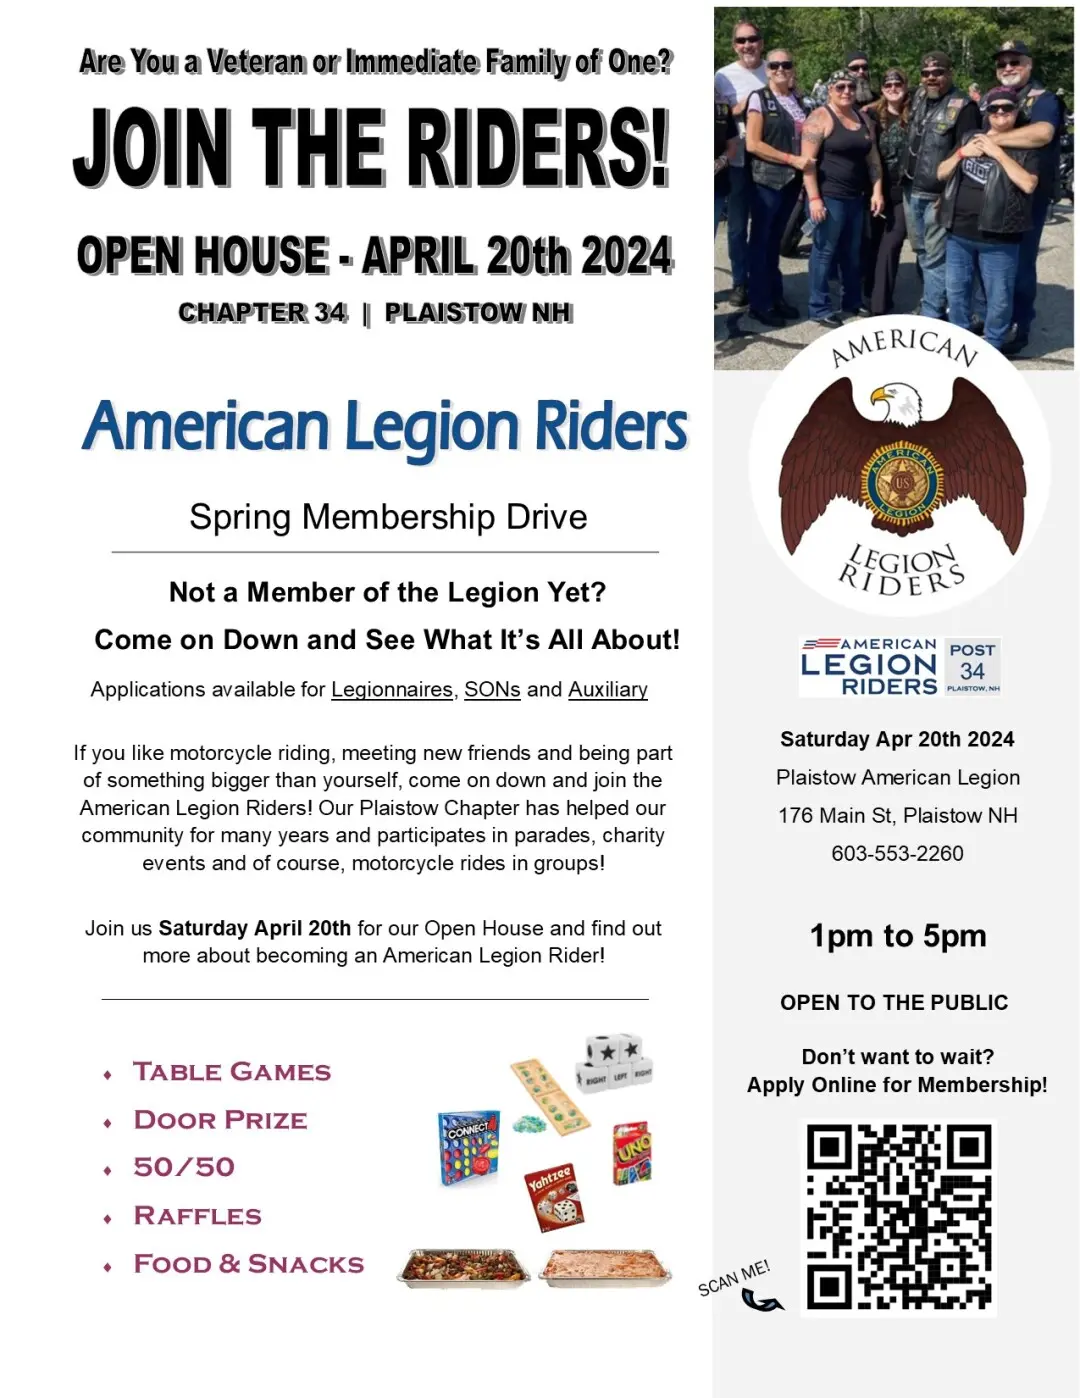 American Legion Riders Open House